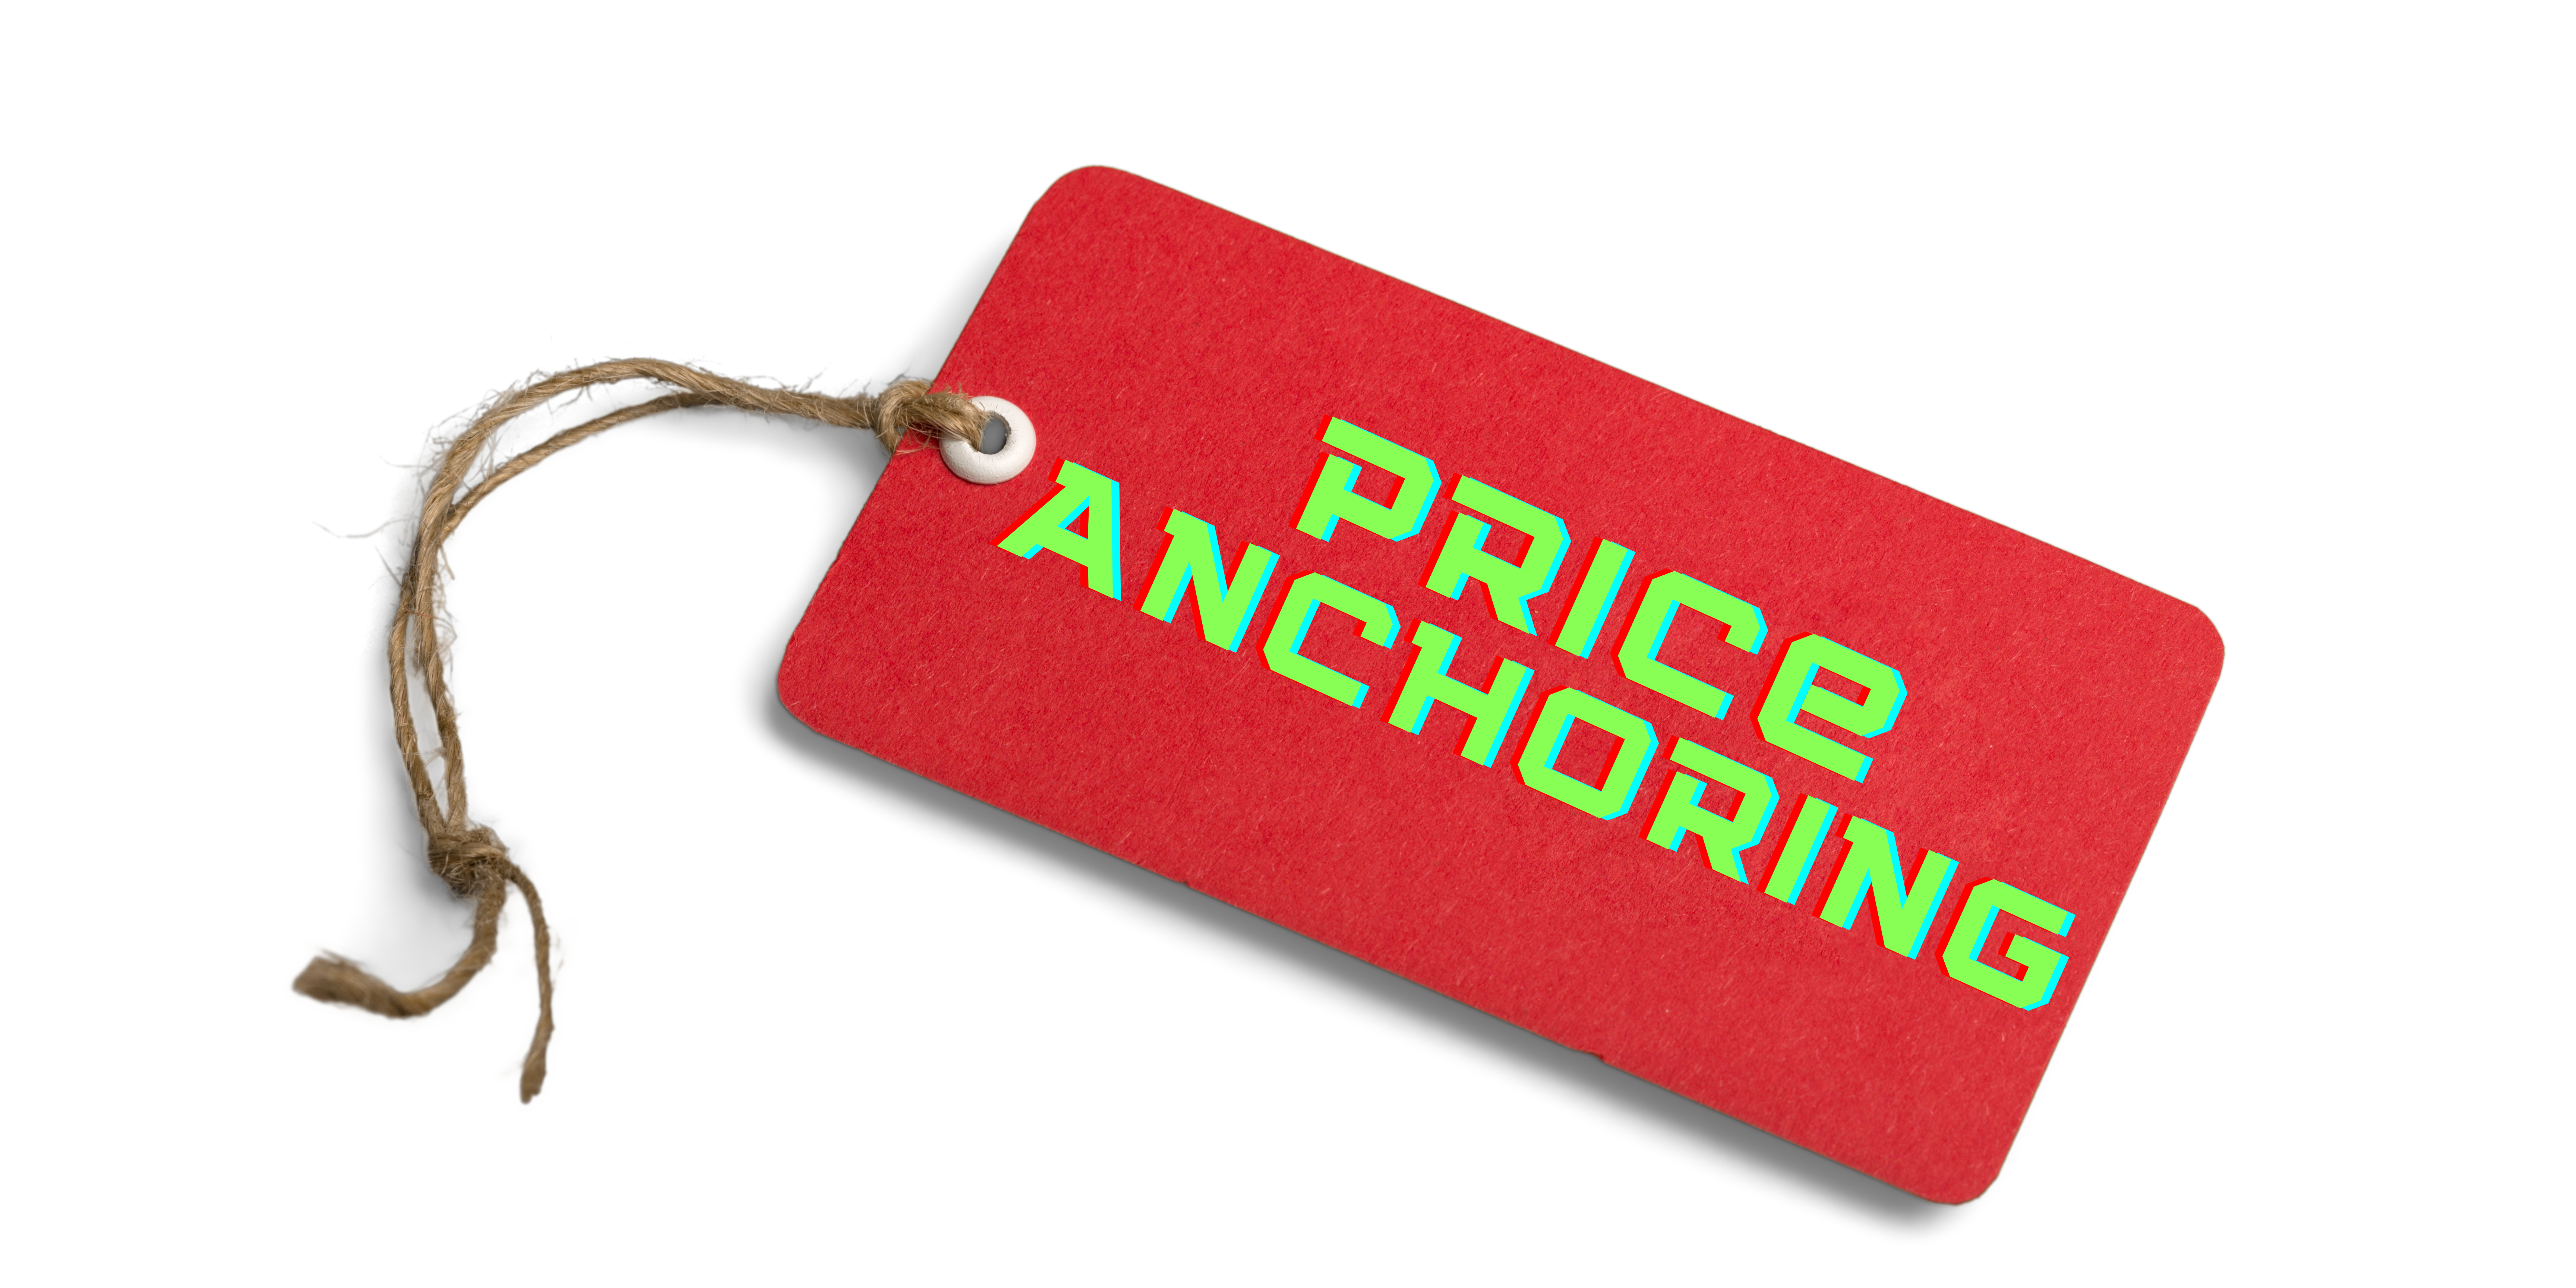 Efficient Price Anchoring